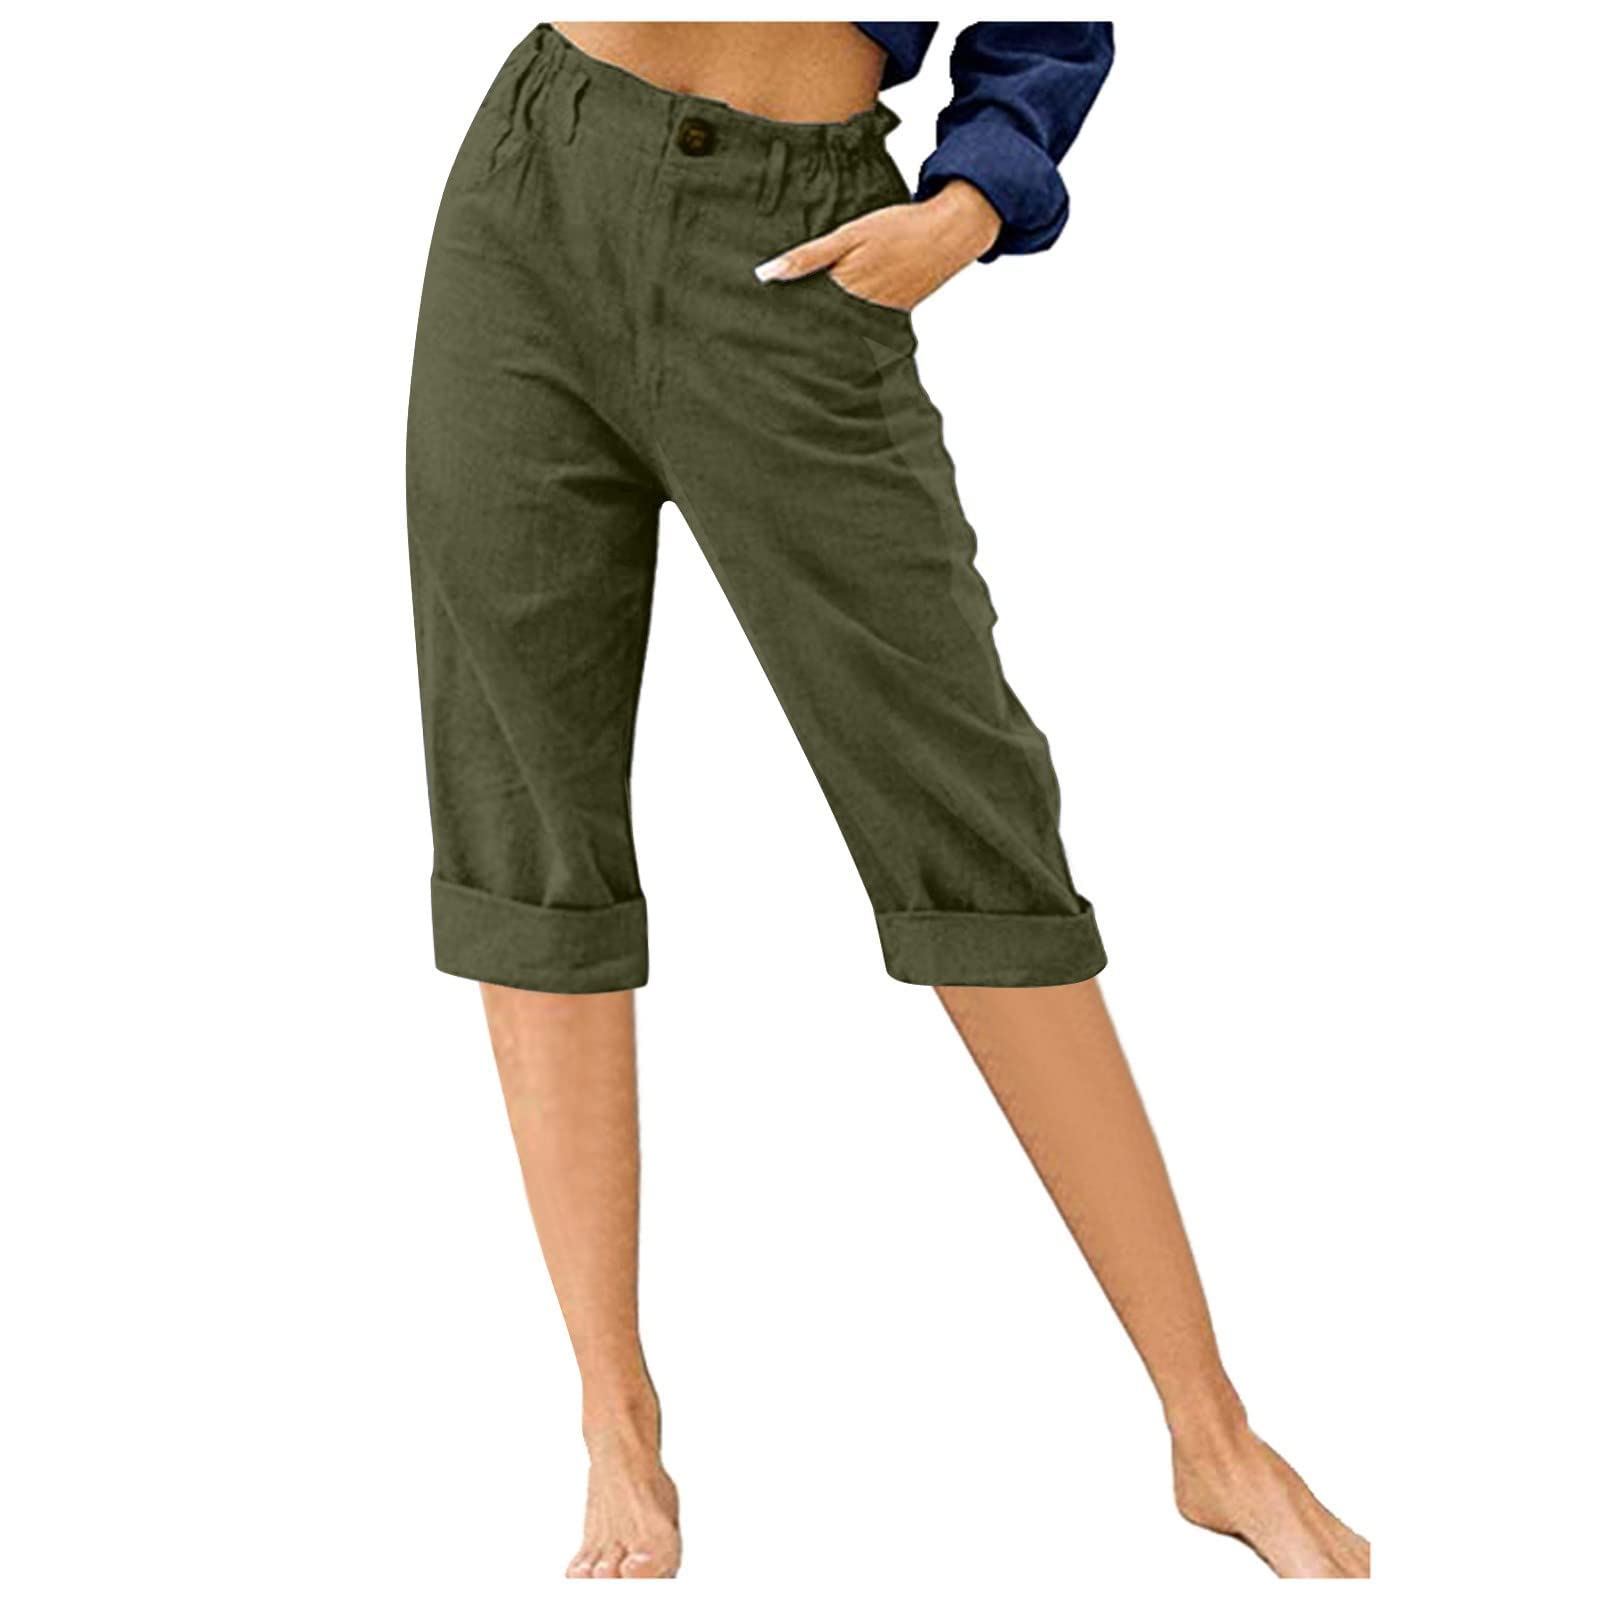 Women's Ladies stretchy Capri pants Jeans Black Sizes UK 6 8 10 12 14 | eBay